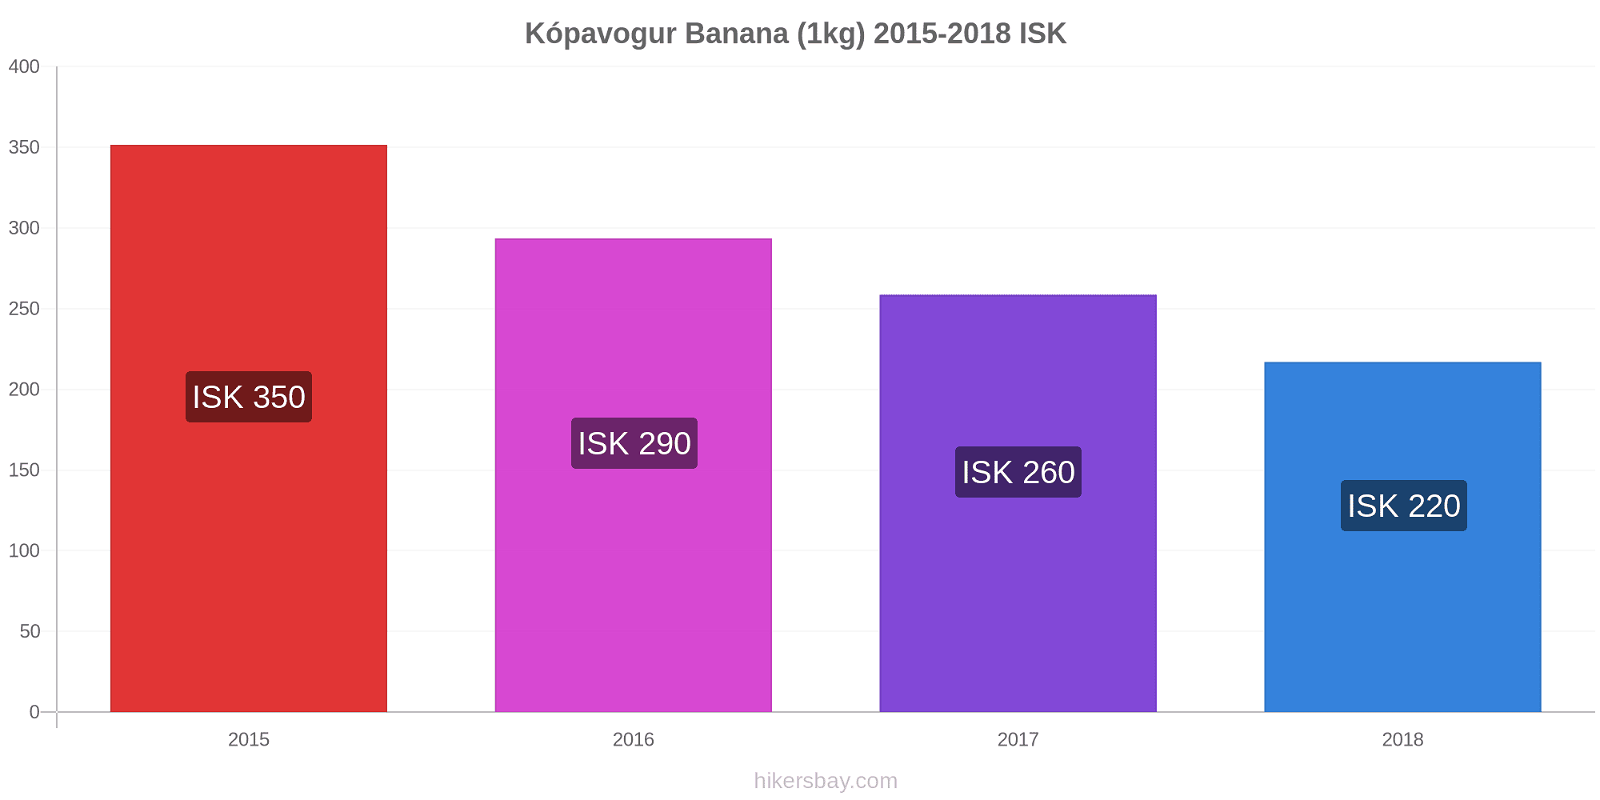 Kópavogur modificări de preț Banana (1kg) hikersbay.com